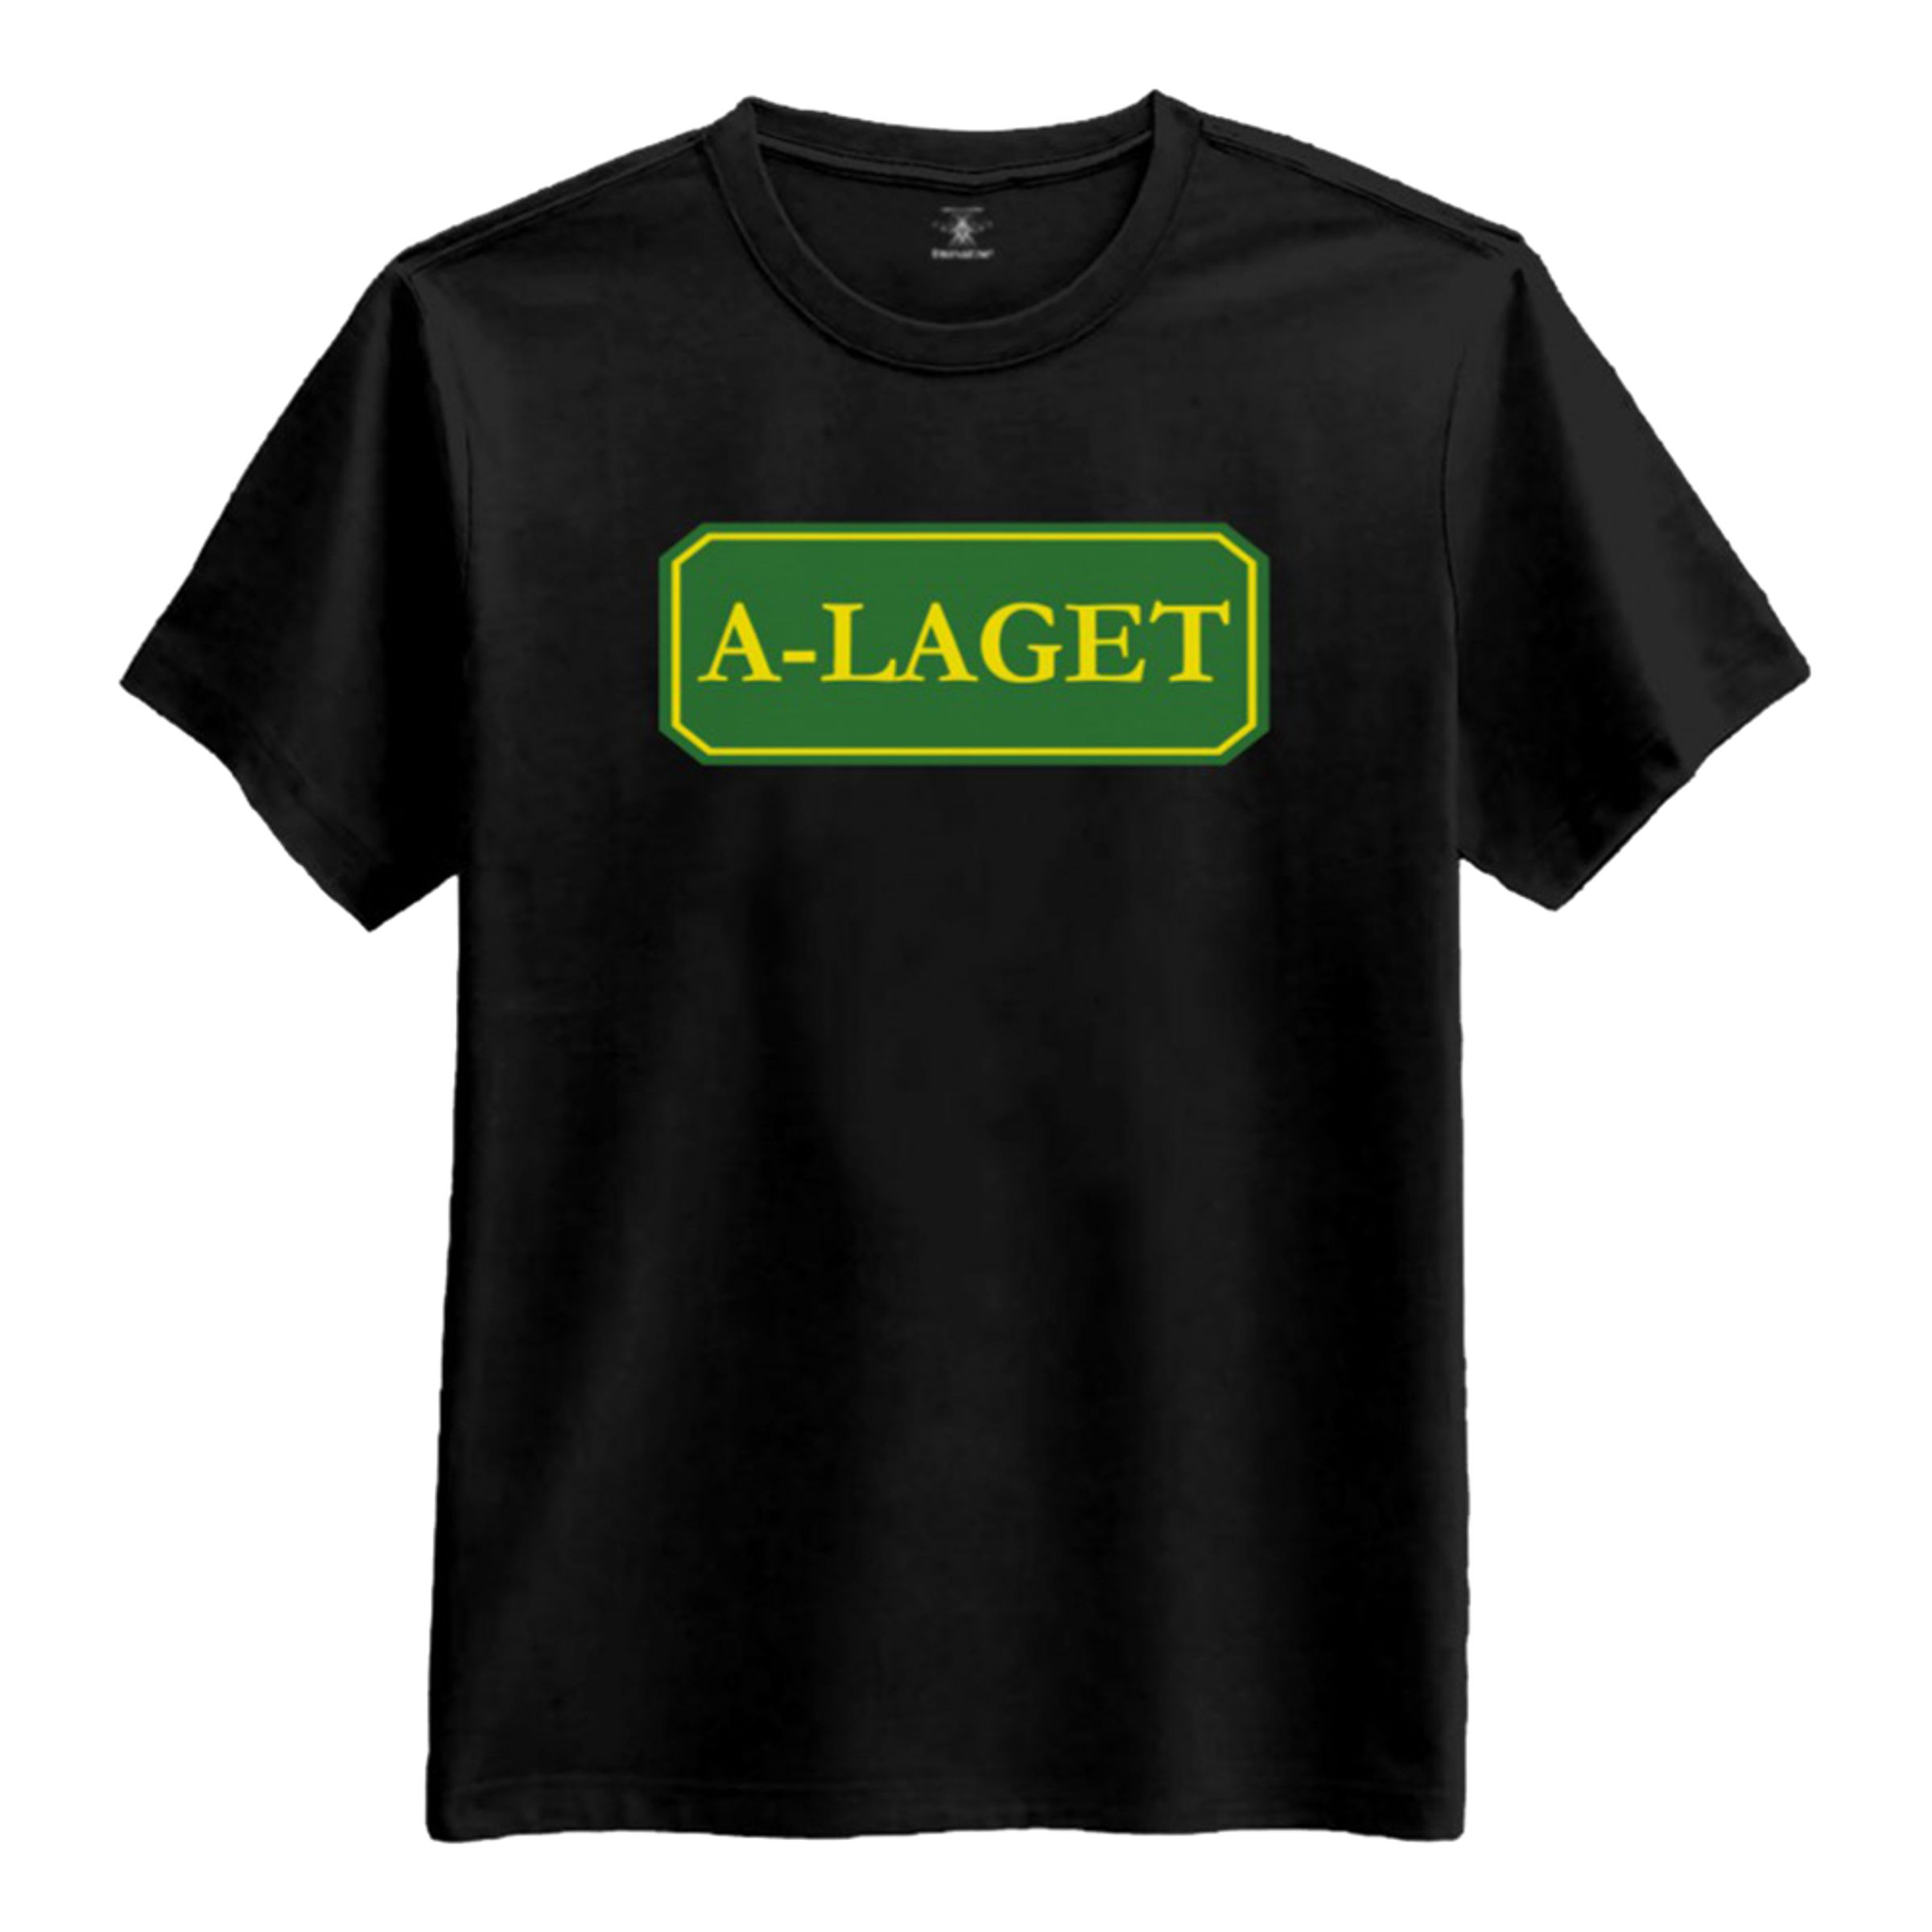 A-laget T-shirt - X-Large